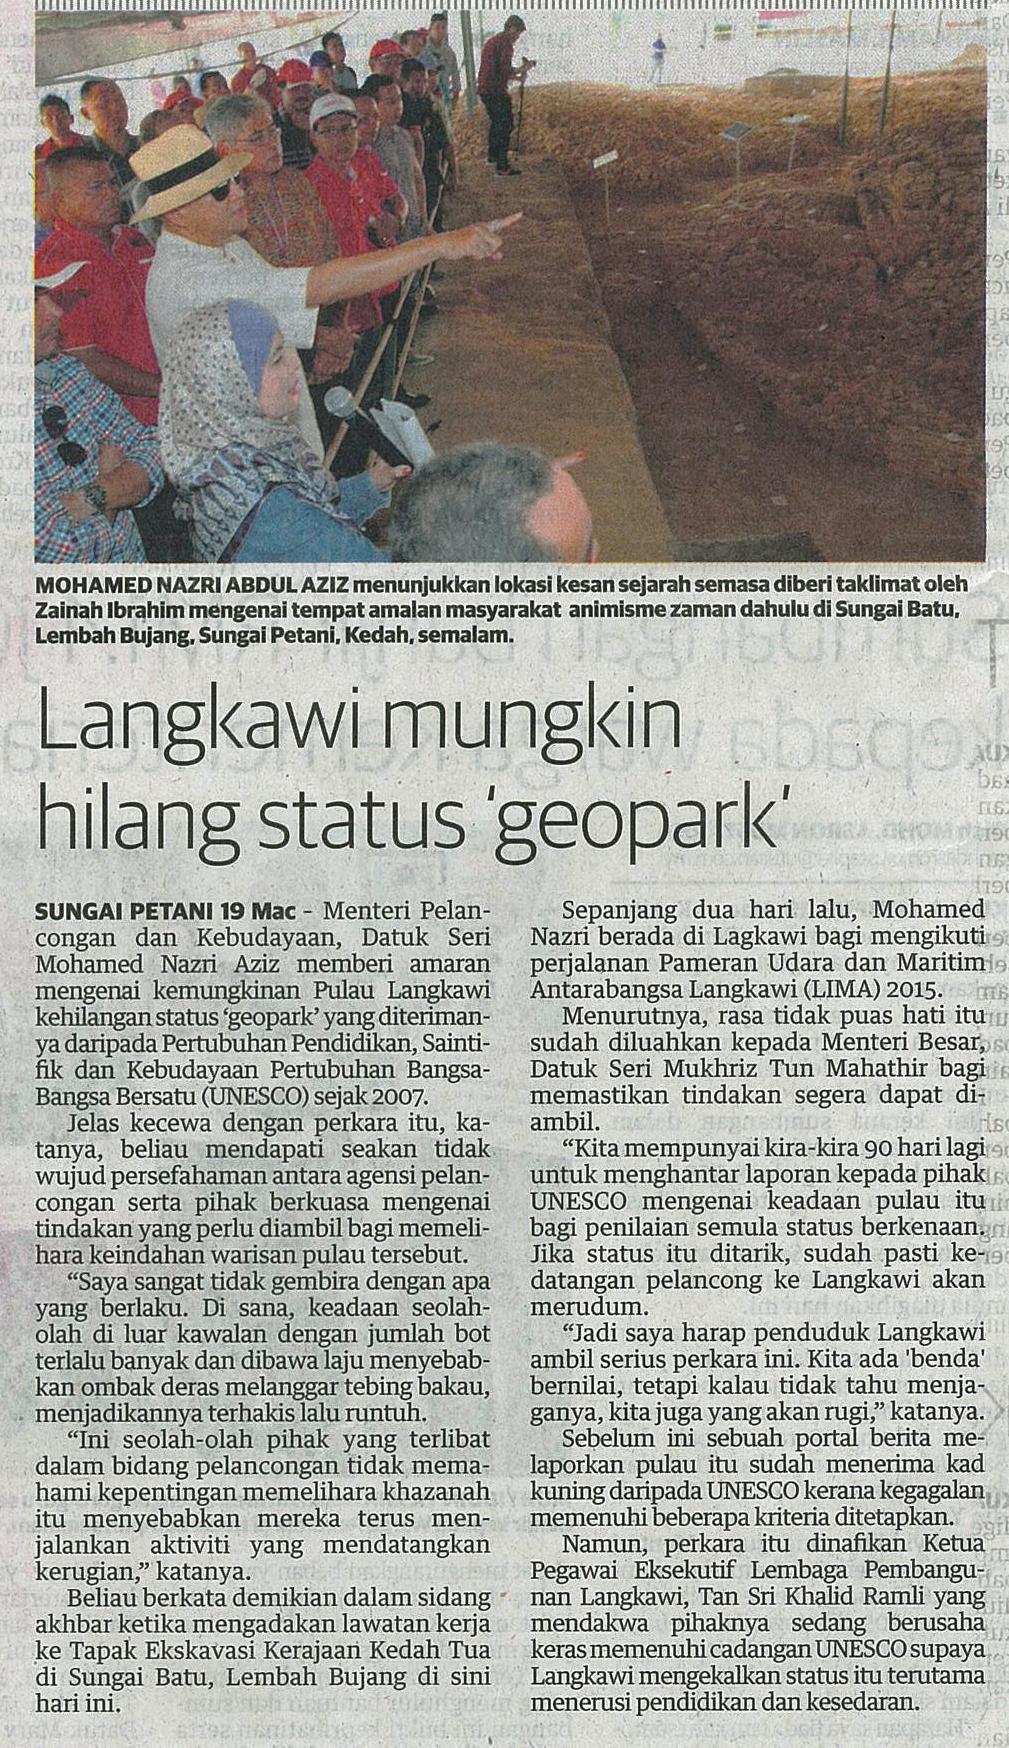 20 Mac 2015 Langkawi mungkin hilang status geopark Utusan